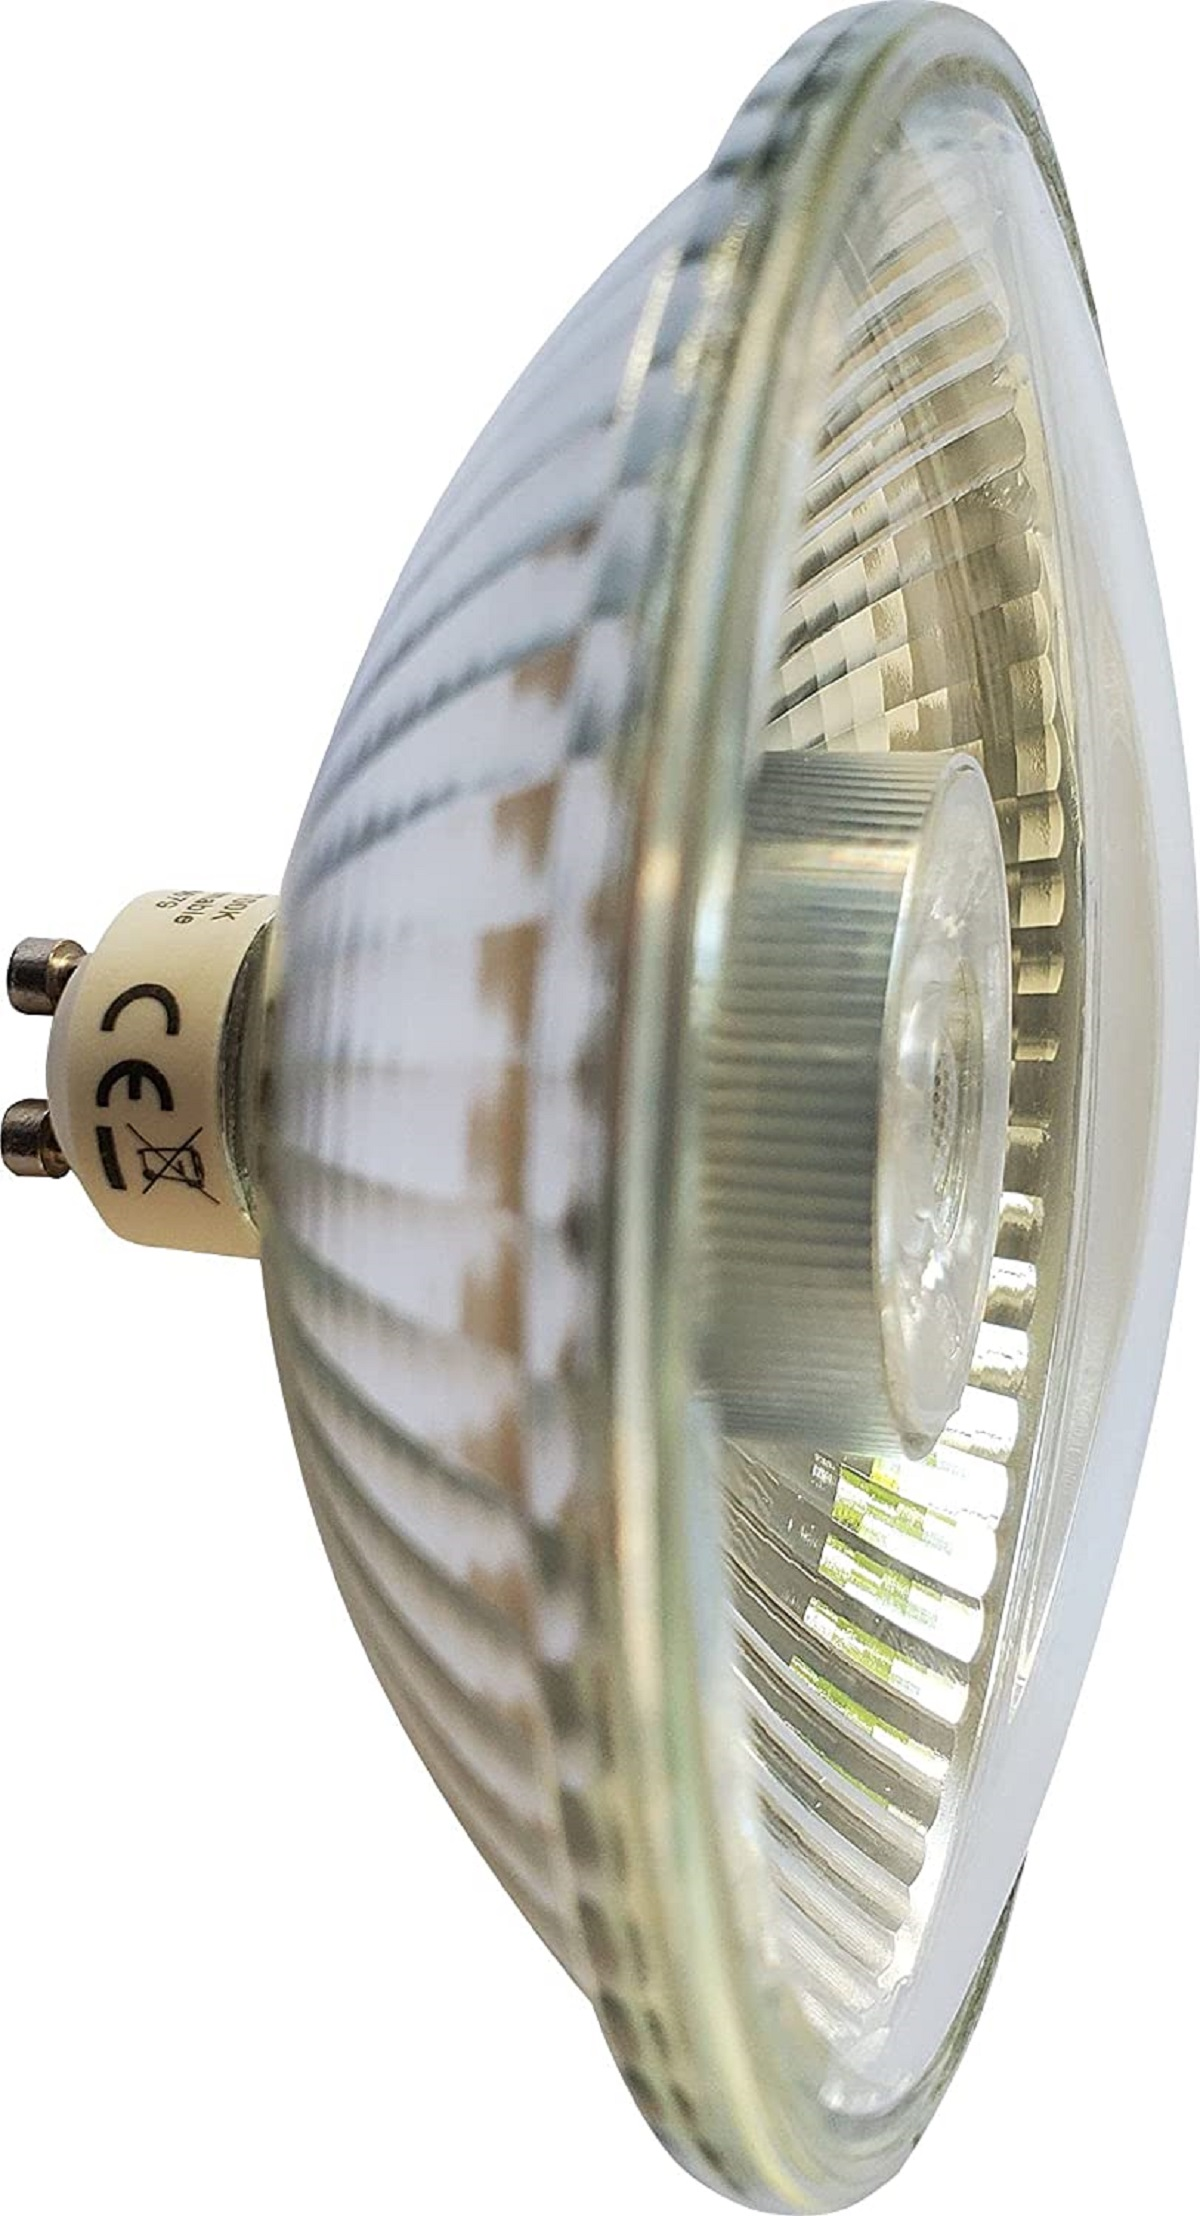 LED Lampe LED Warm GU10 BOLD Reflektor Lumen Quinn DIE 425 Weiß